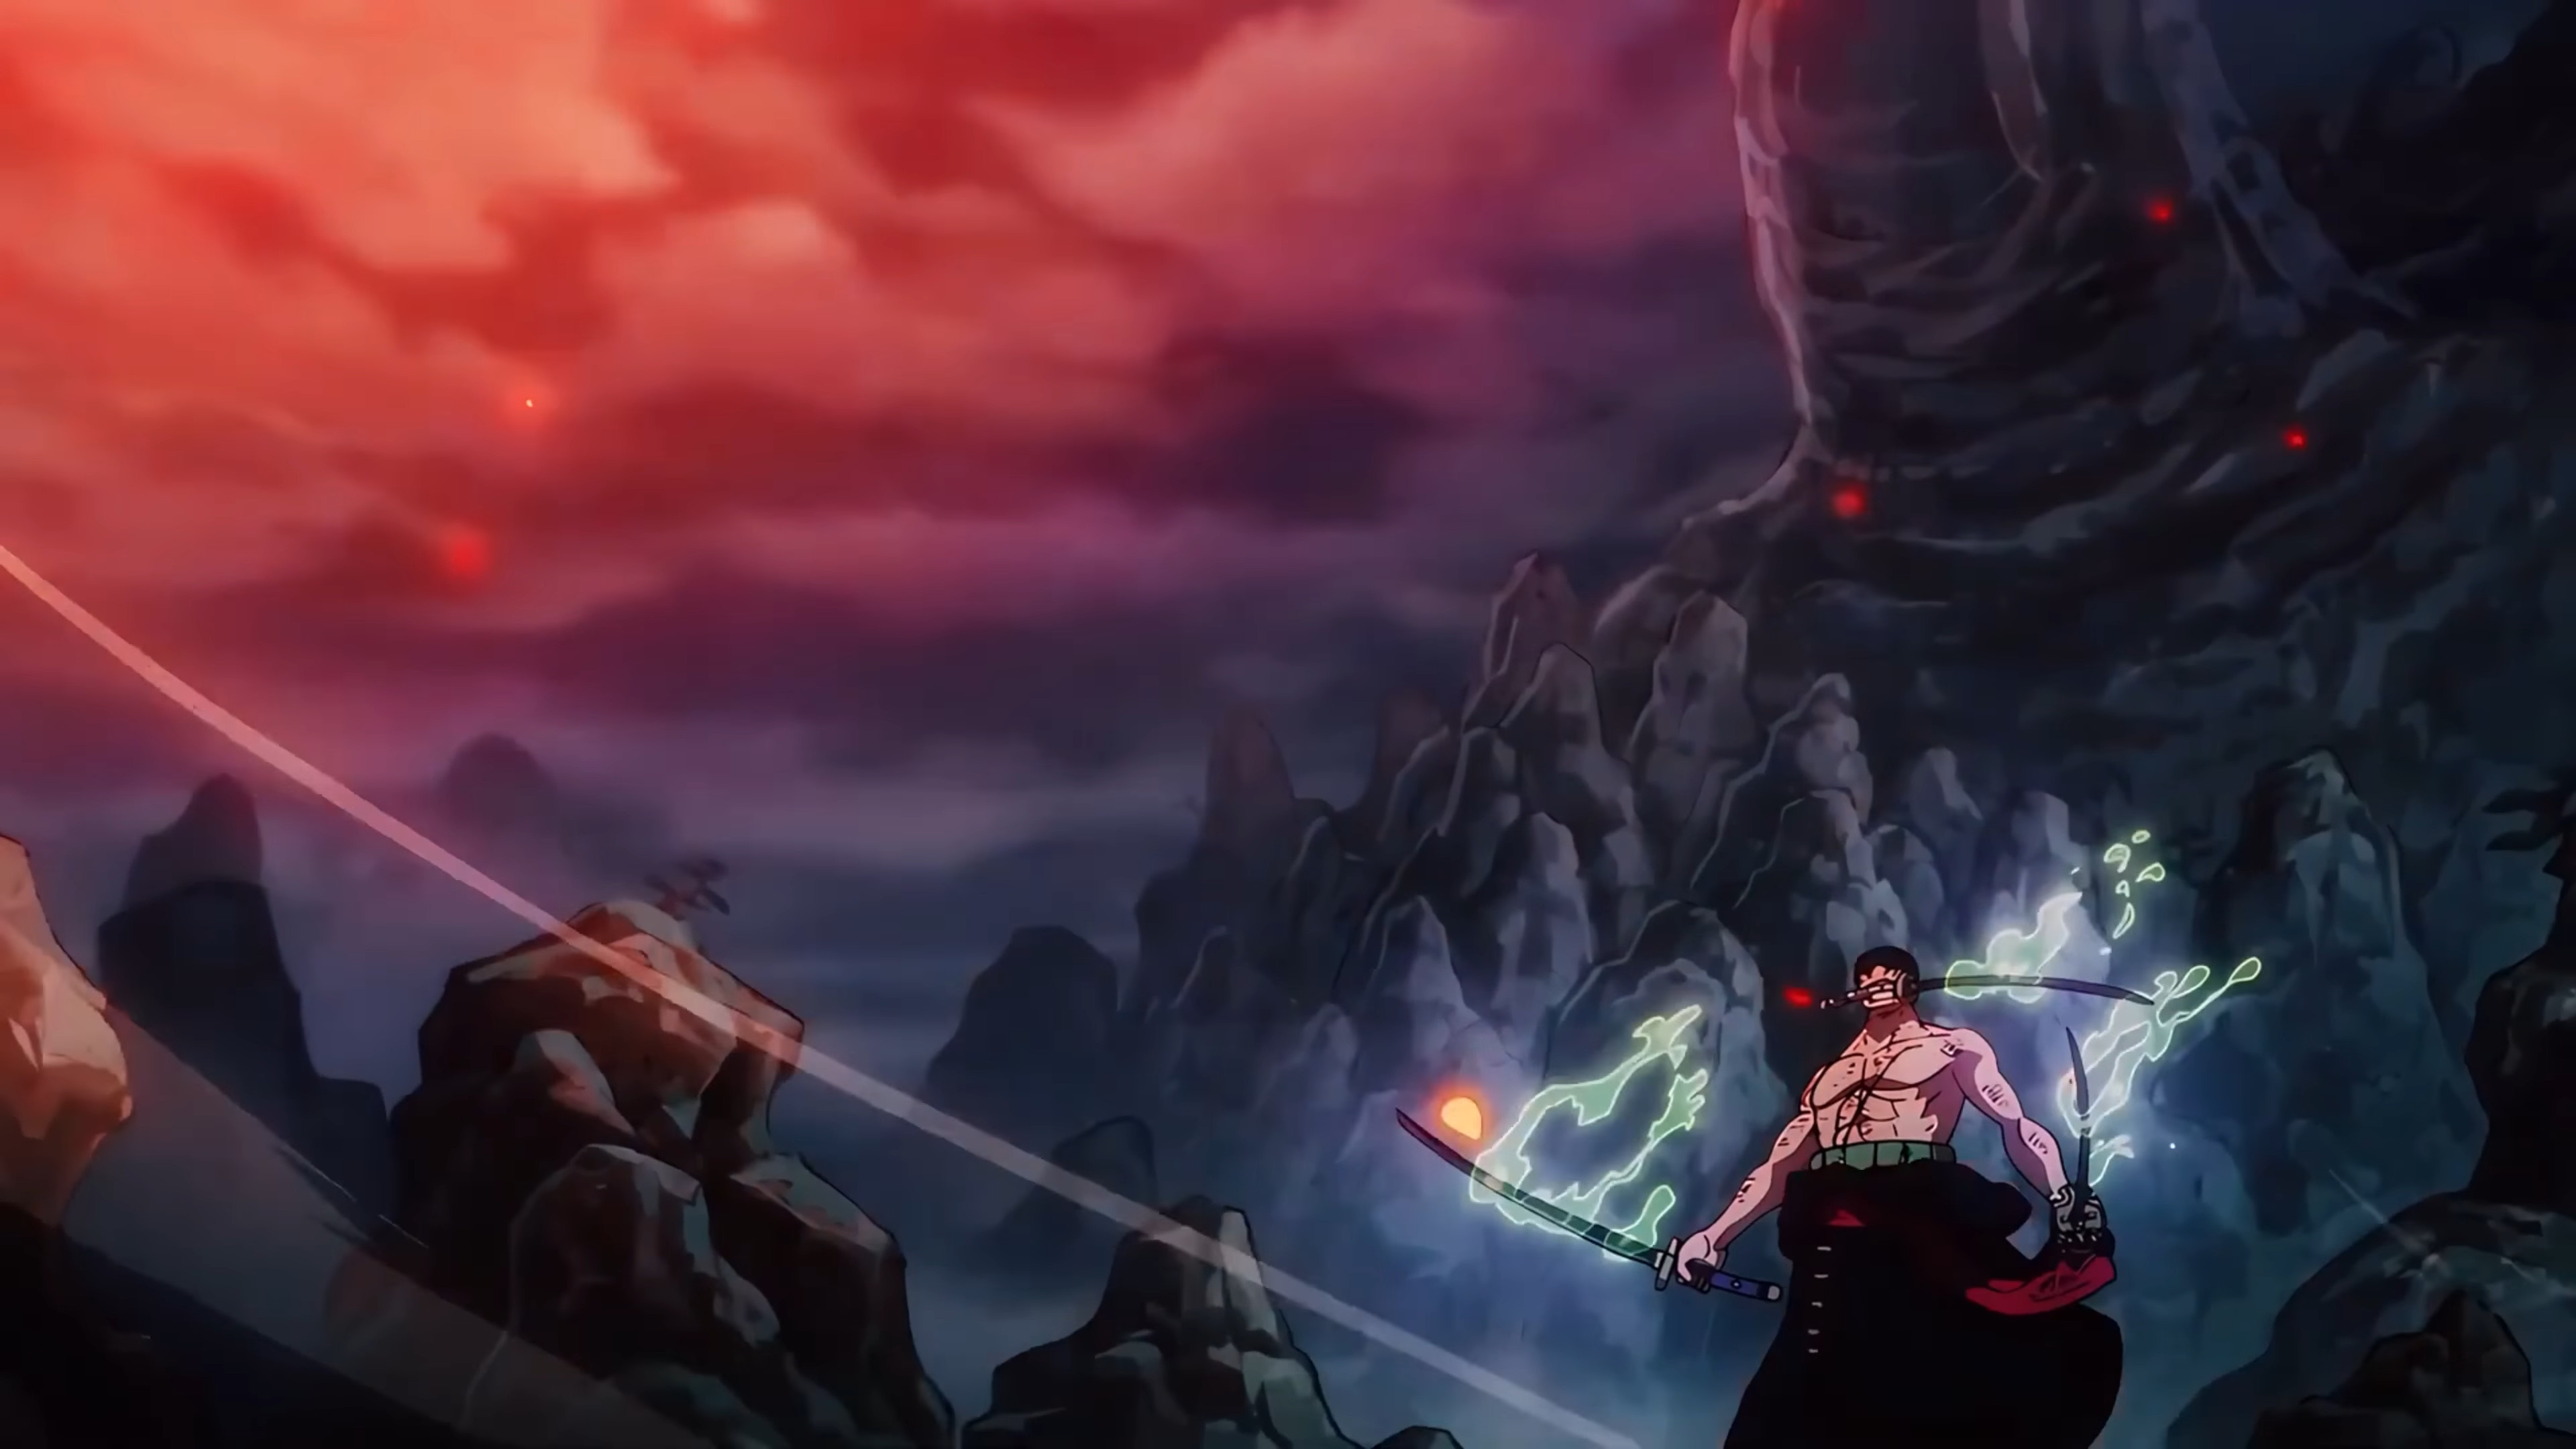 One Piece Anime Boys Swordsman Anime Anime Screenshot Sky Clouds Sword Shirtless Roronoa Zoro 3840x2160